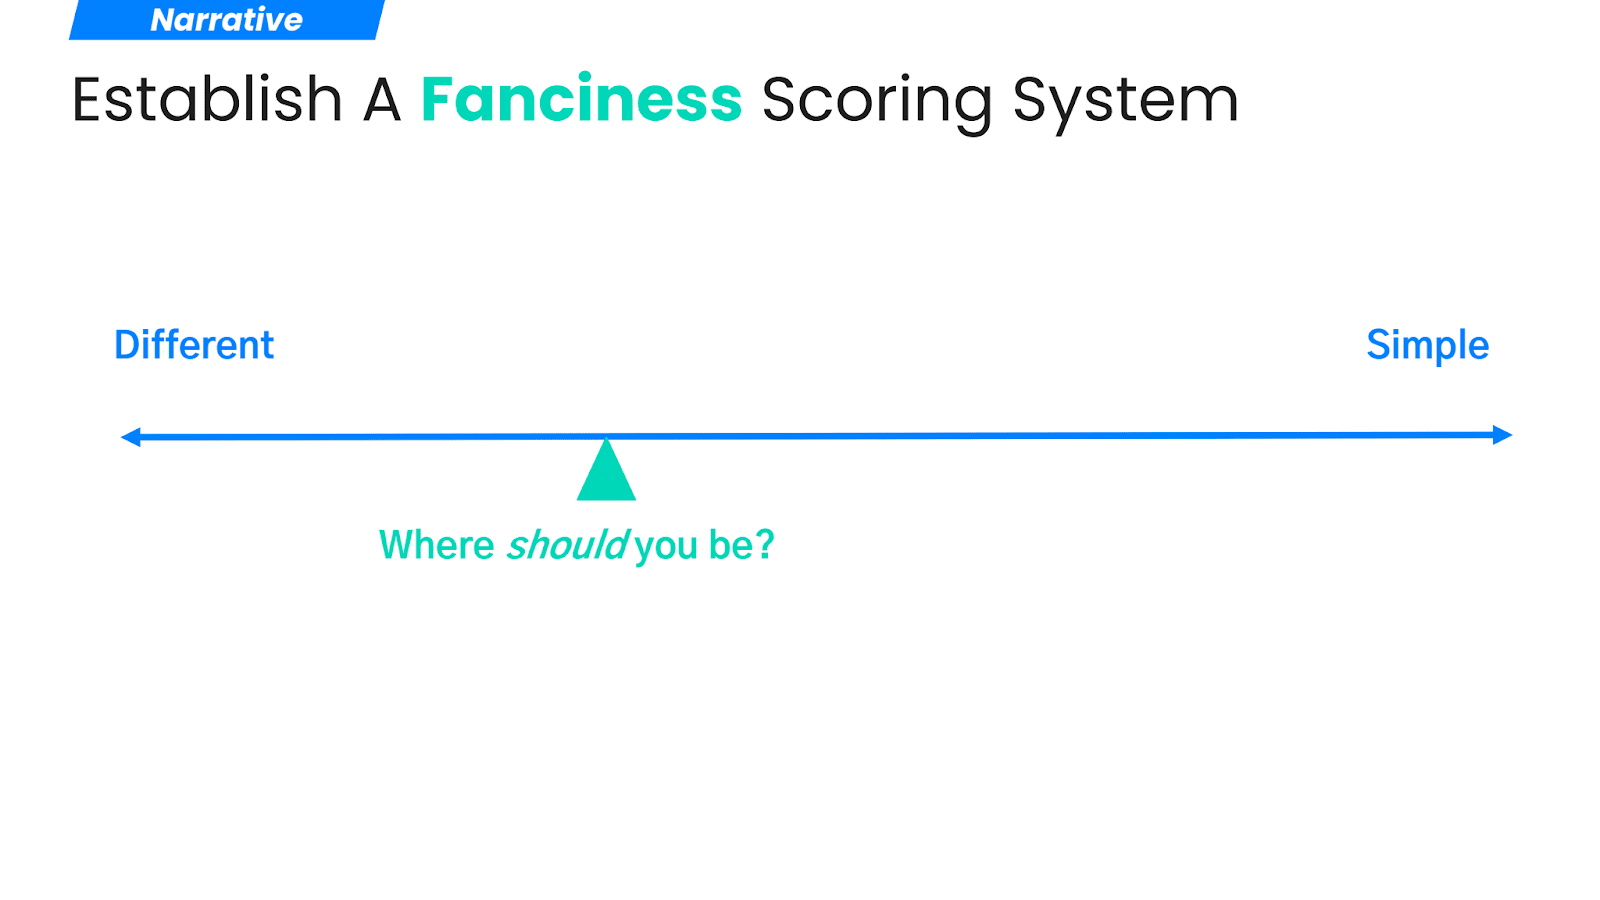 Establish a fanciness scoring system